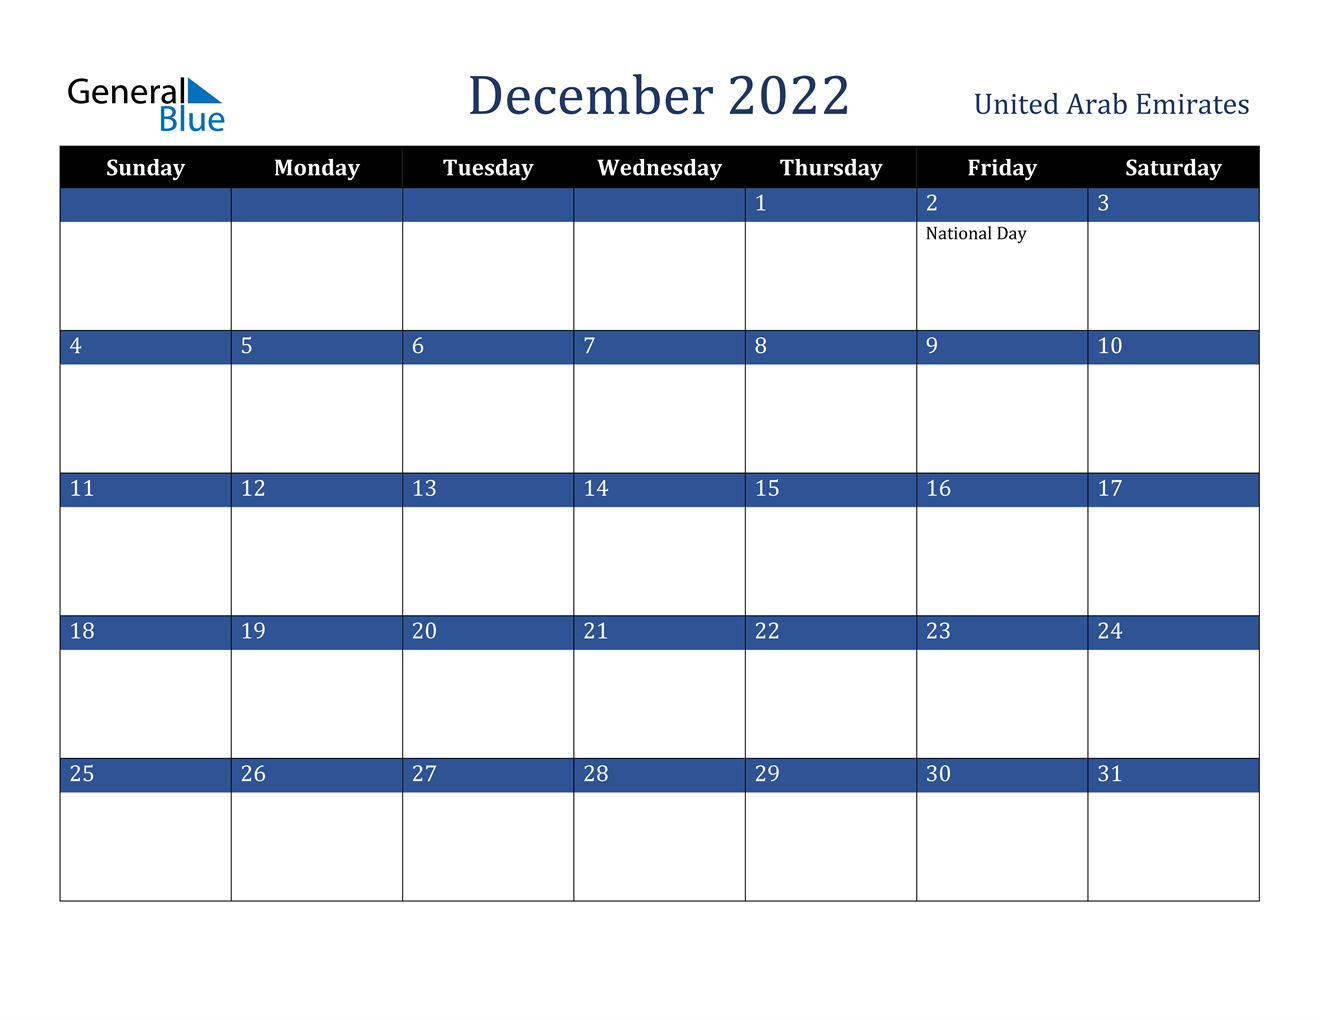 December 2022 Calendar - United Arab Emirates Calendar For December 2022